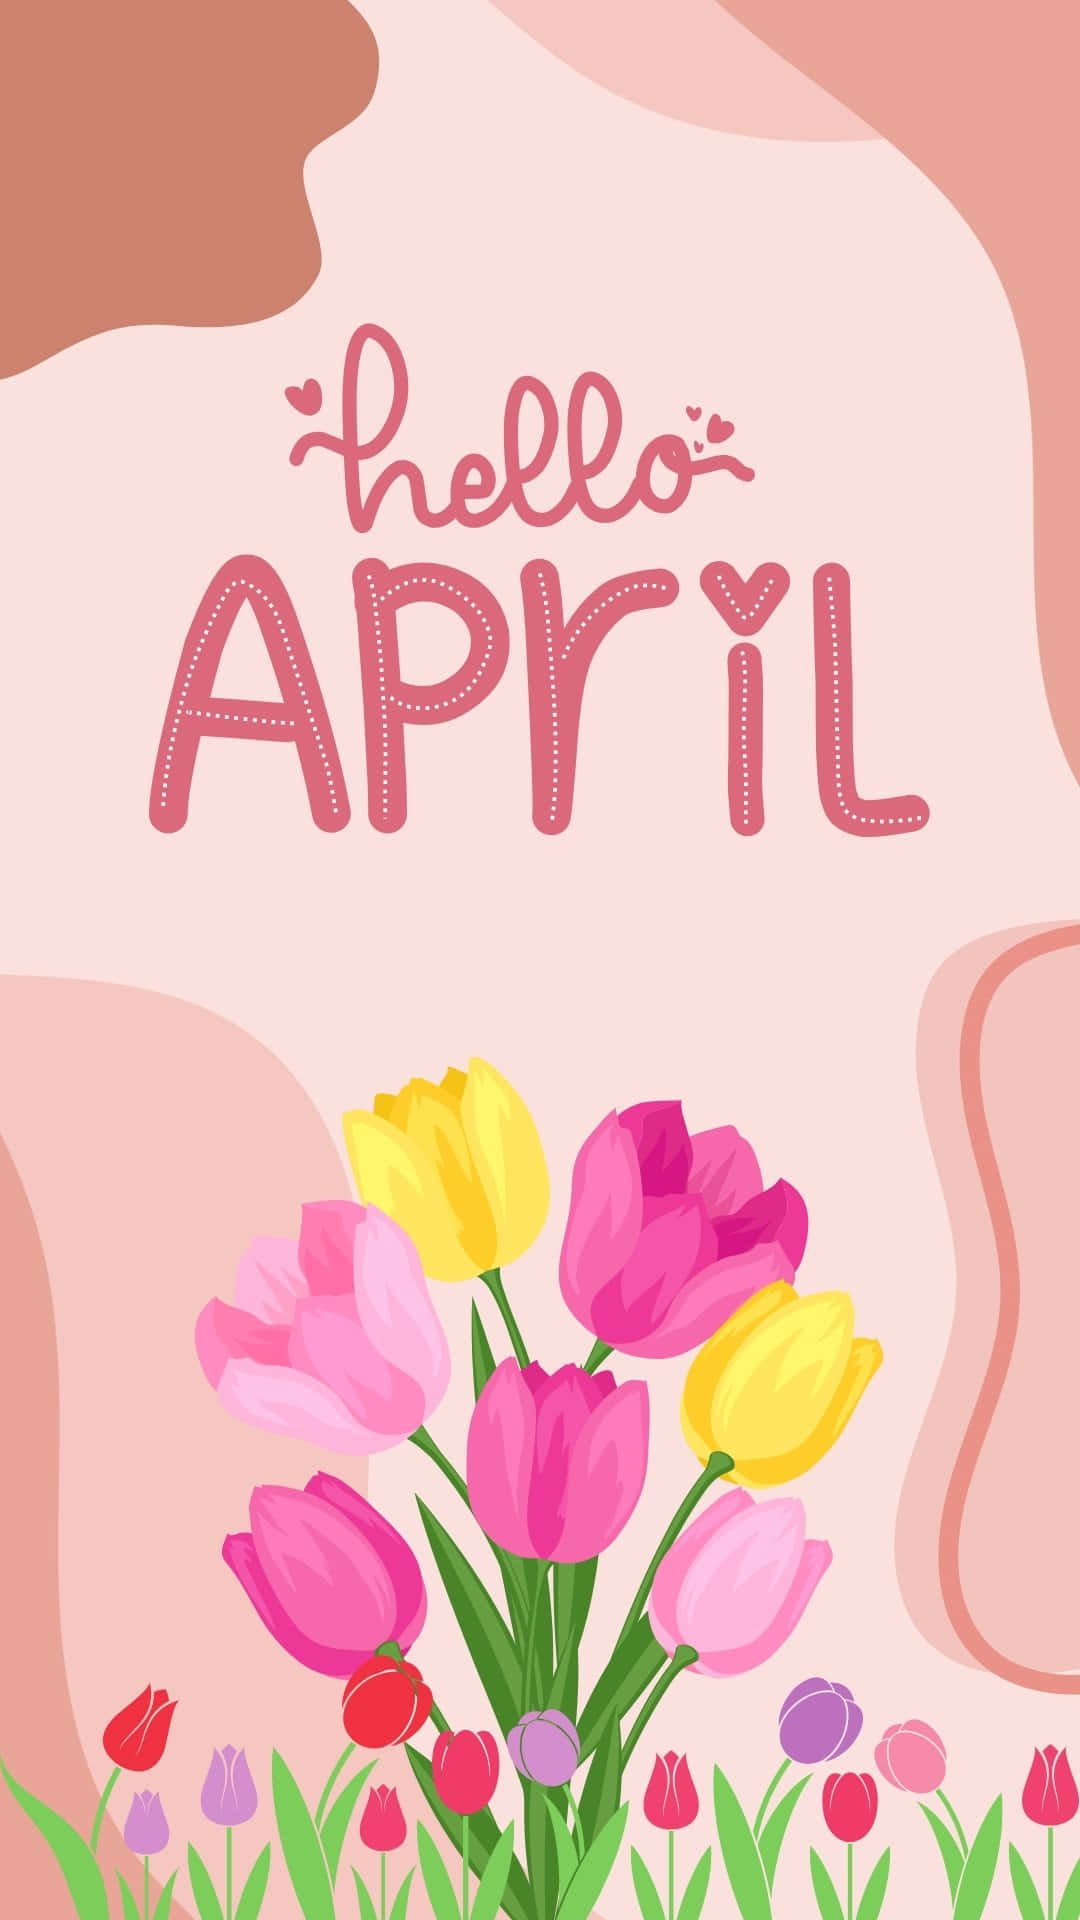 Hello April Greeting Card Wallpaper